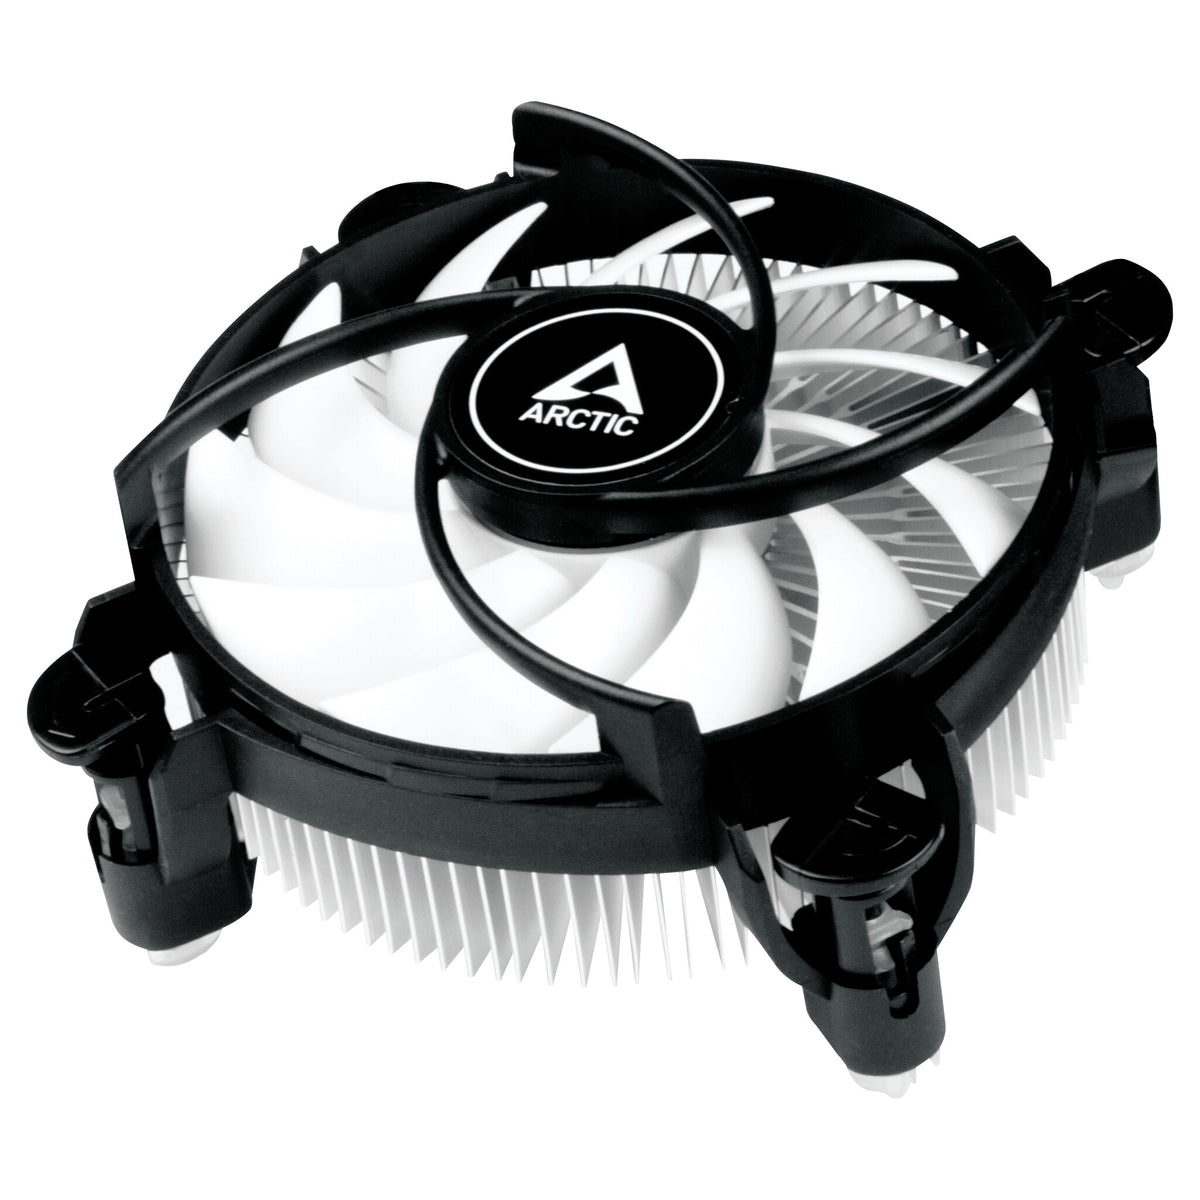 ARCTIC Alpine 17 LP - Low-Profile Air Processor Cooler - 88mm